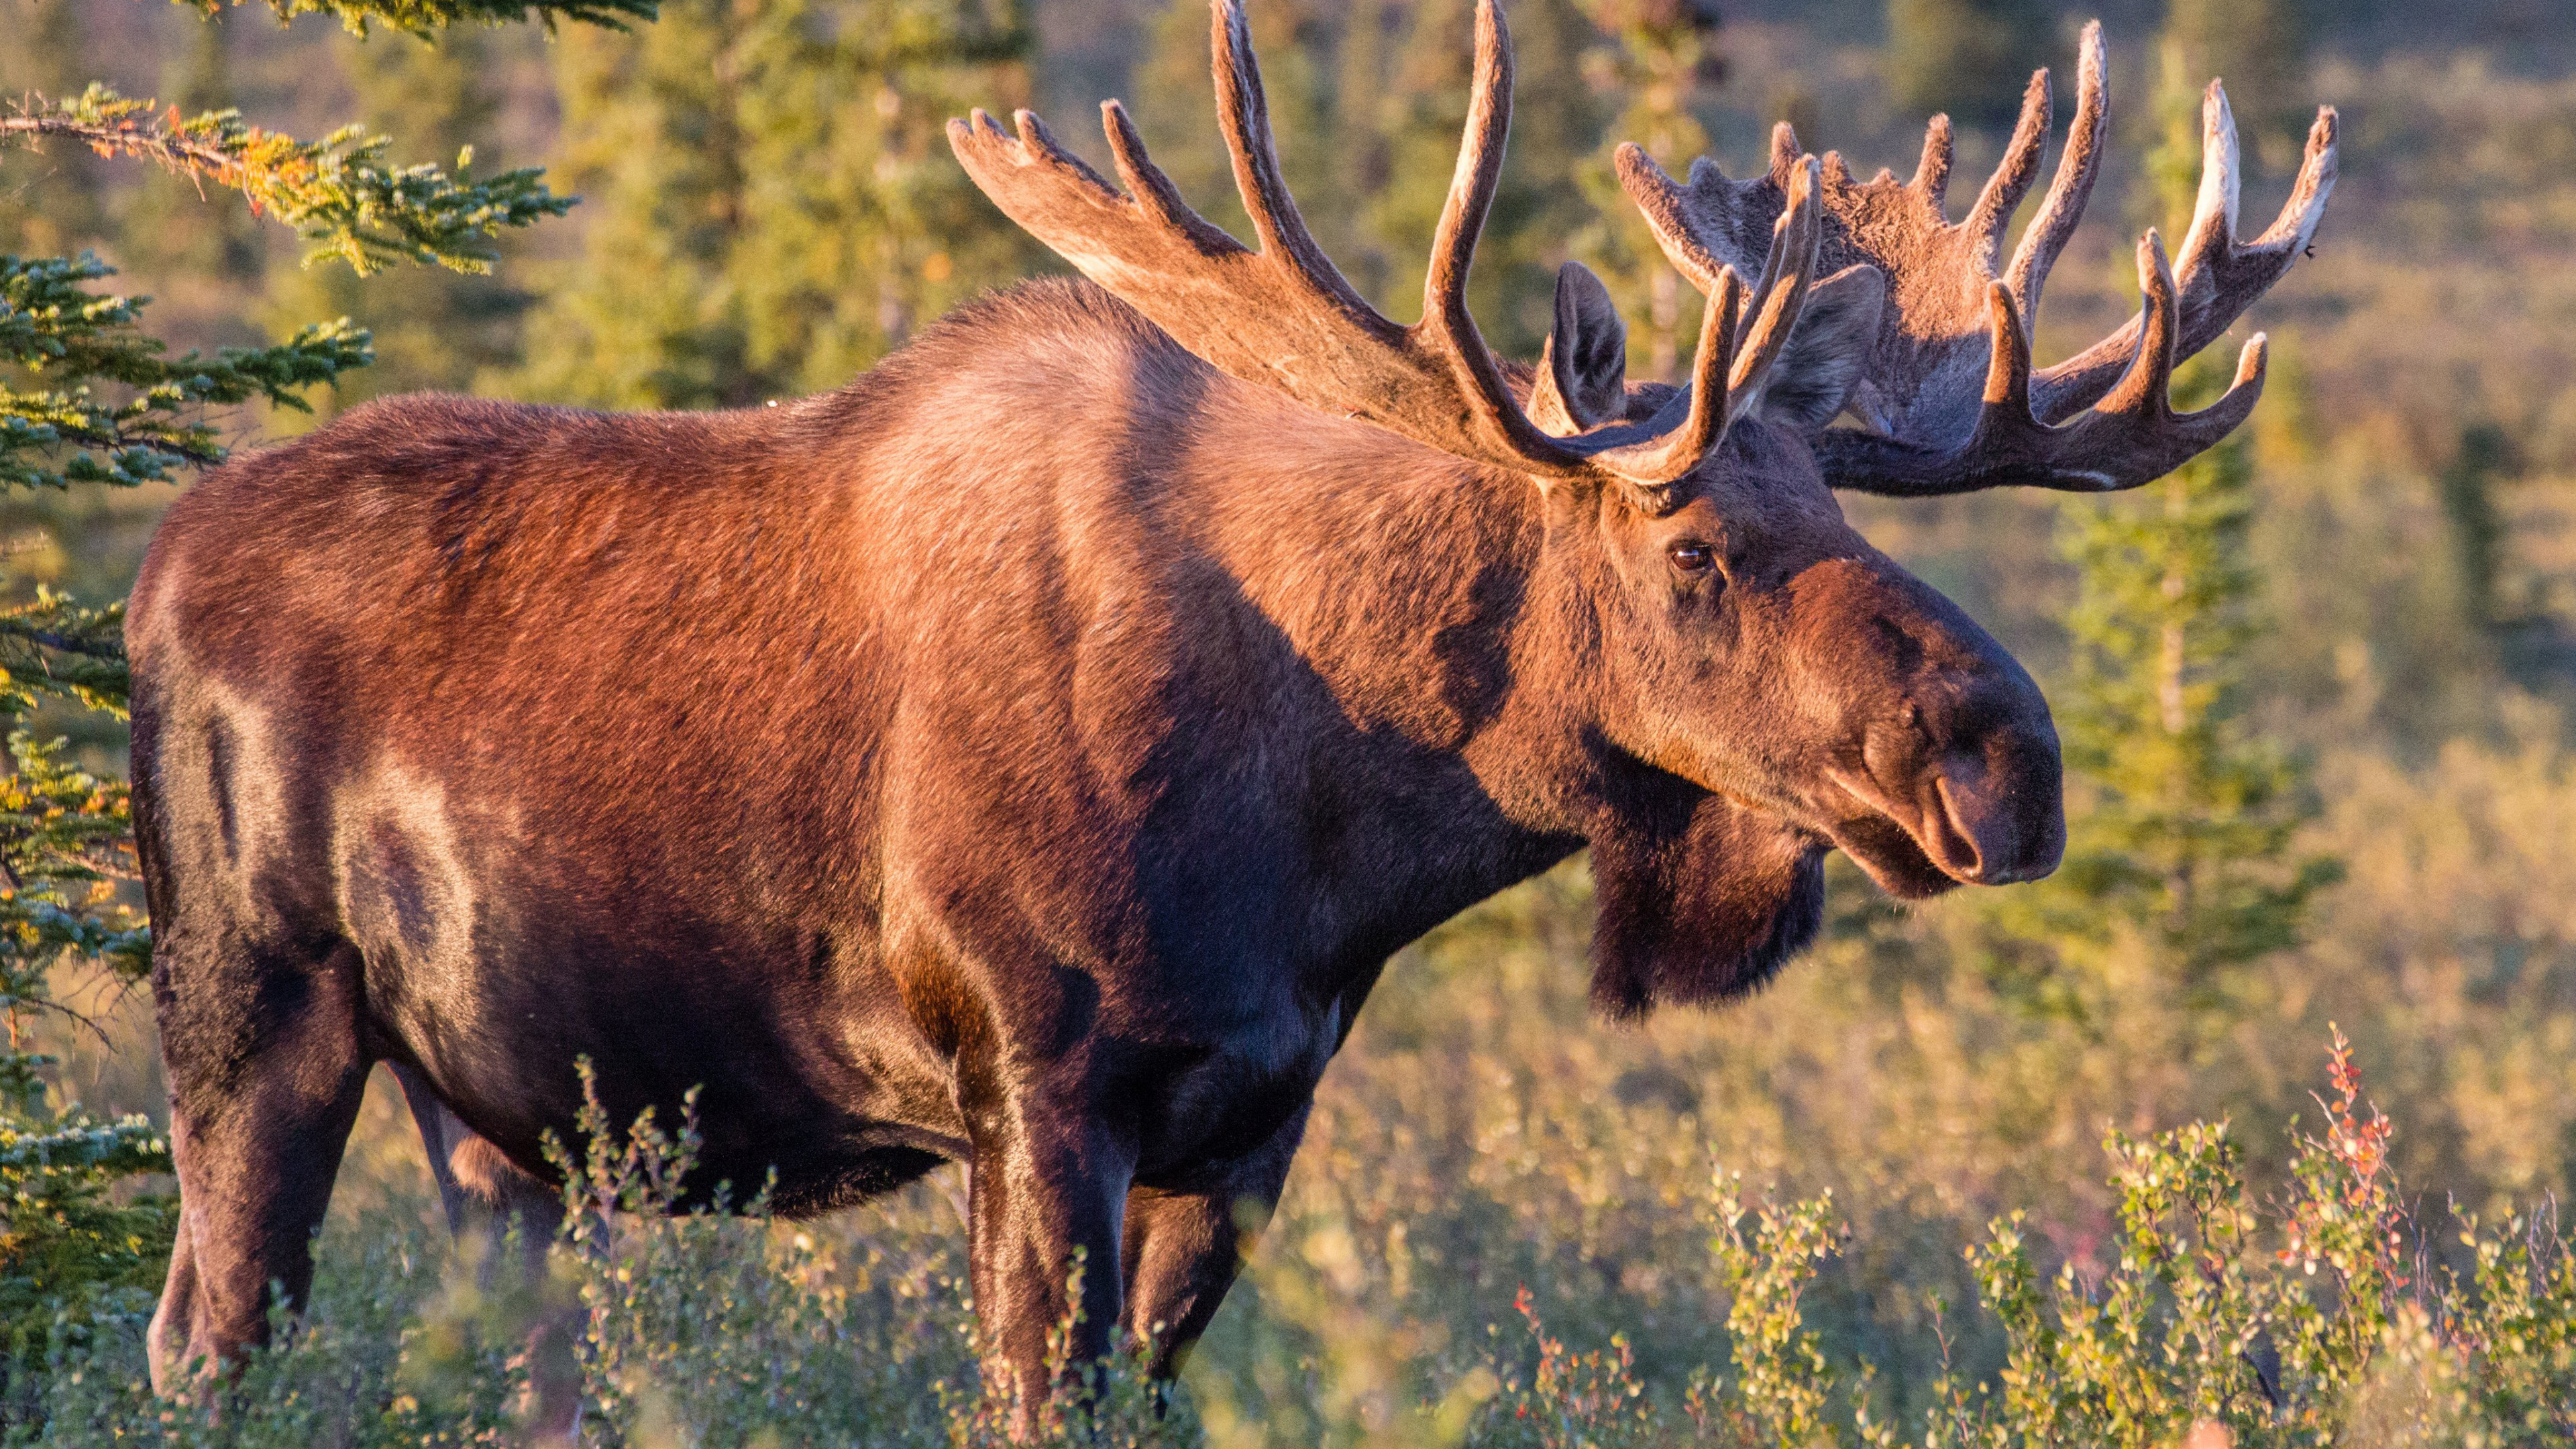 Majestic moose, High-definition beauty, Striking visuals, Wallpaper perfection, 3840x2160 4K Desktop